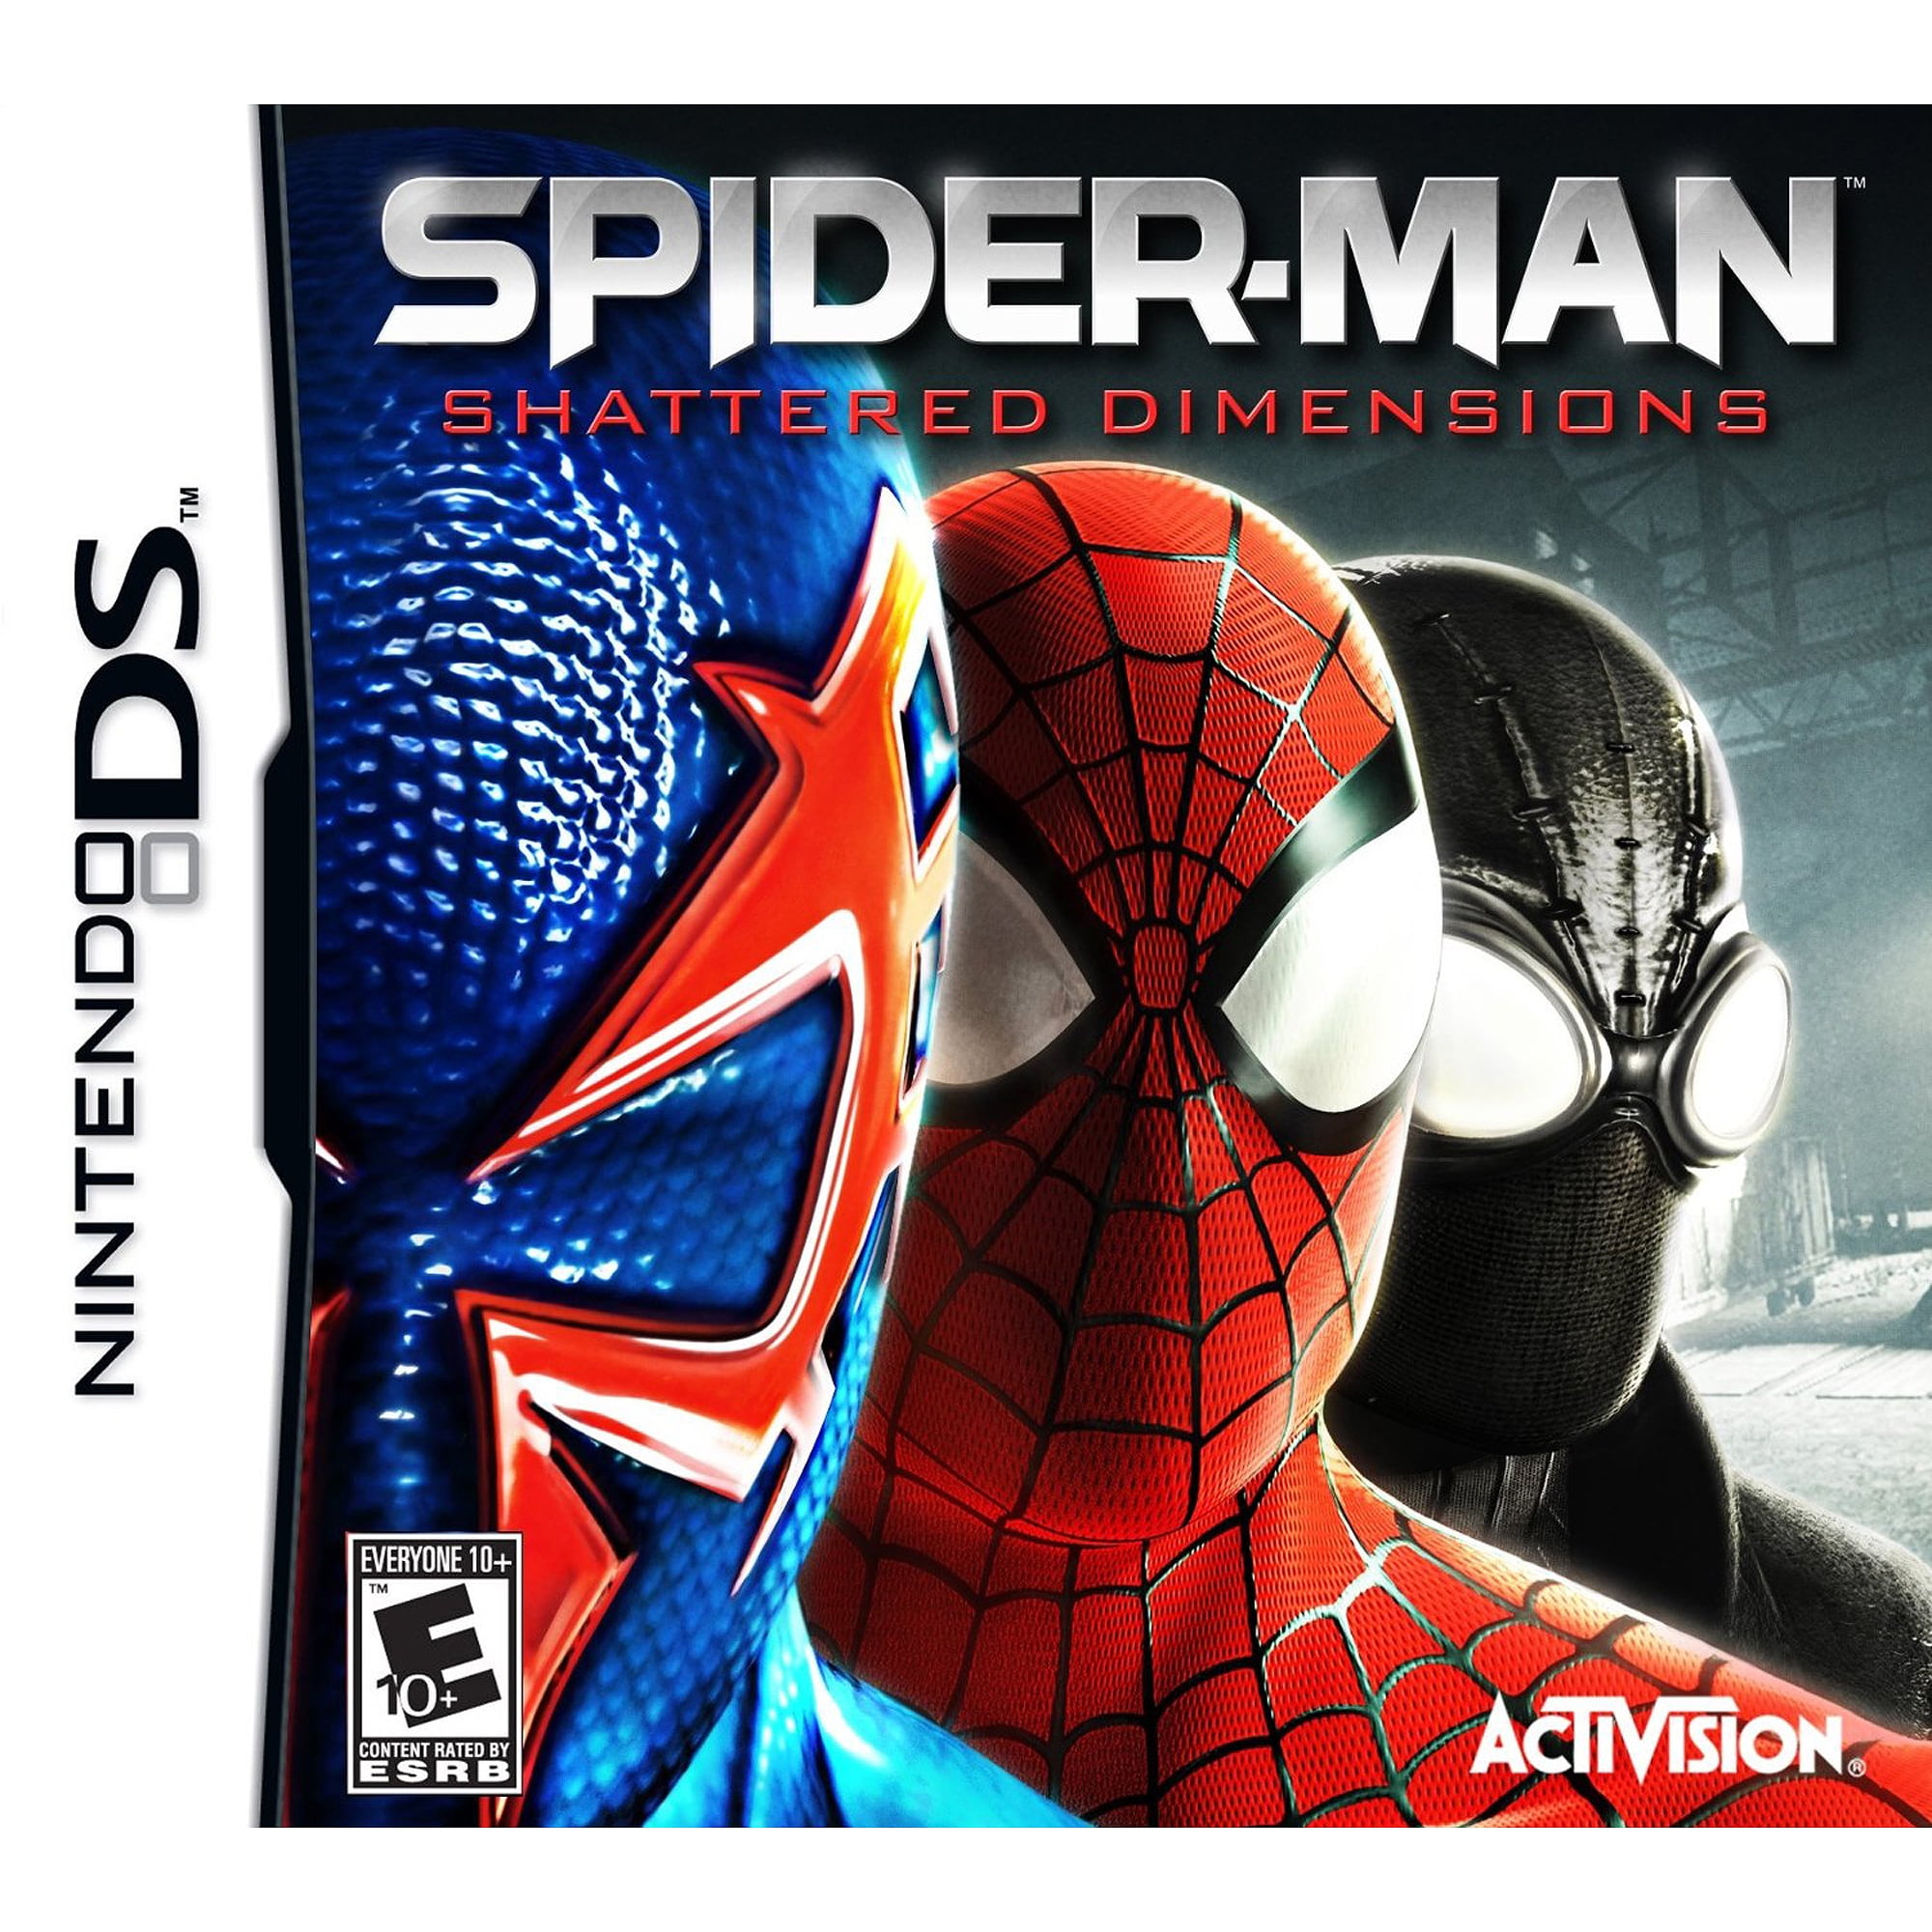 Человек паук nintendo. Человек паук на Нинтендо ДС. Spider man Shattered Dimensions Nintendo DS. Spider man 3 Nintendo DS. Spider man Nintendo DS обложка.